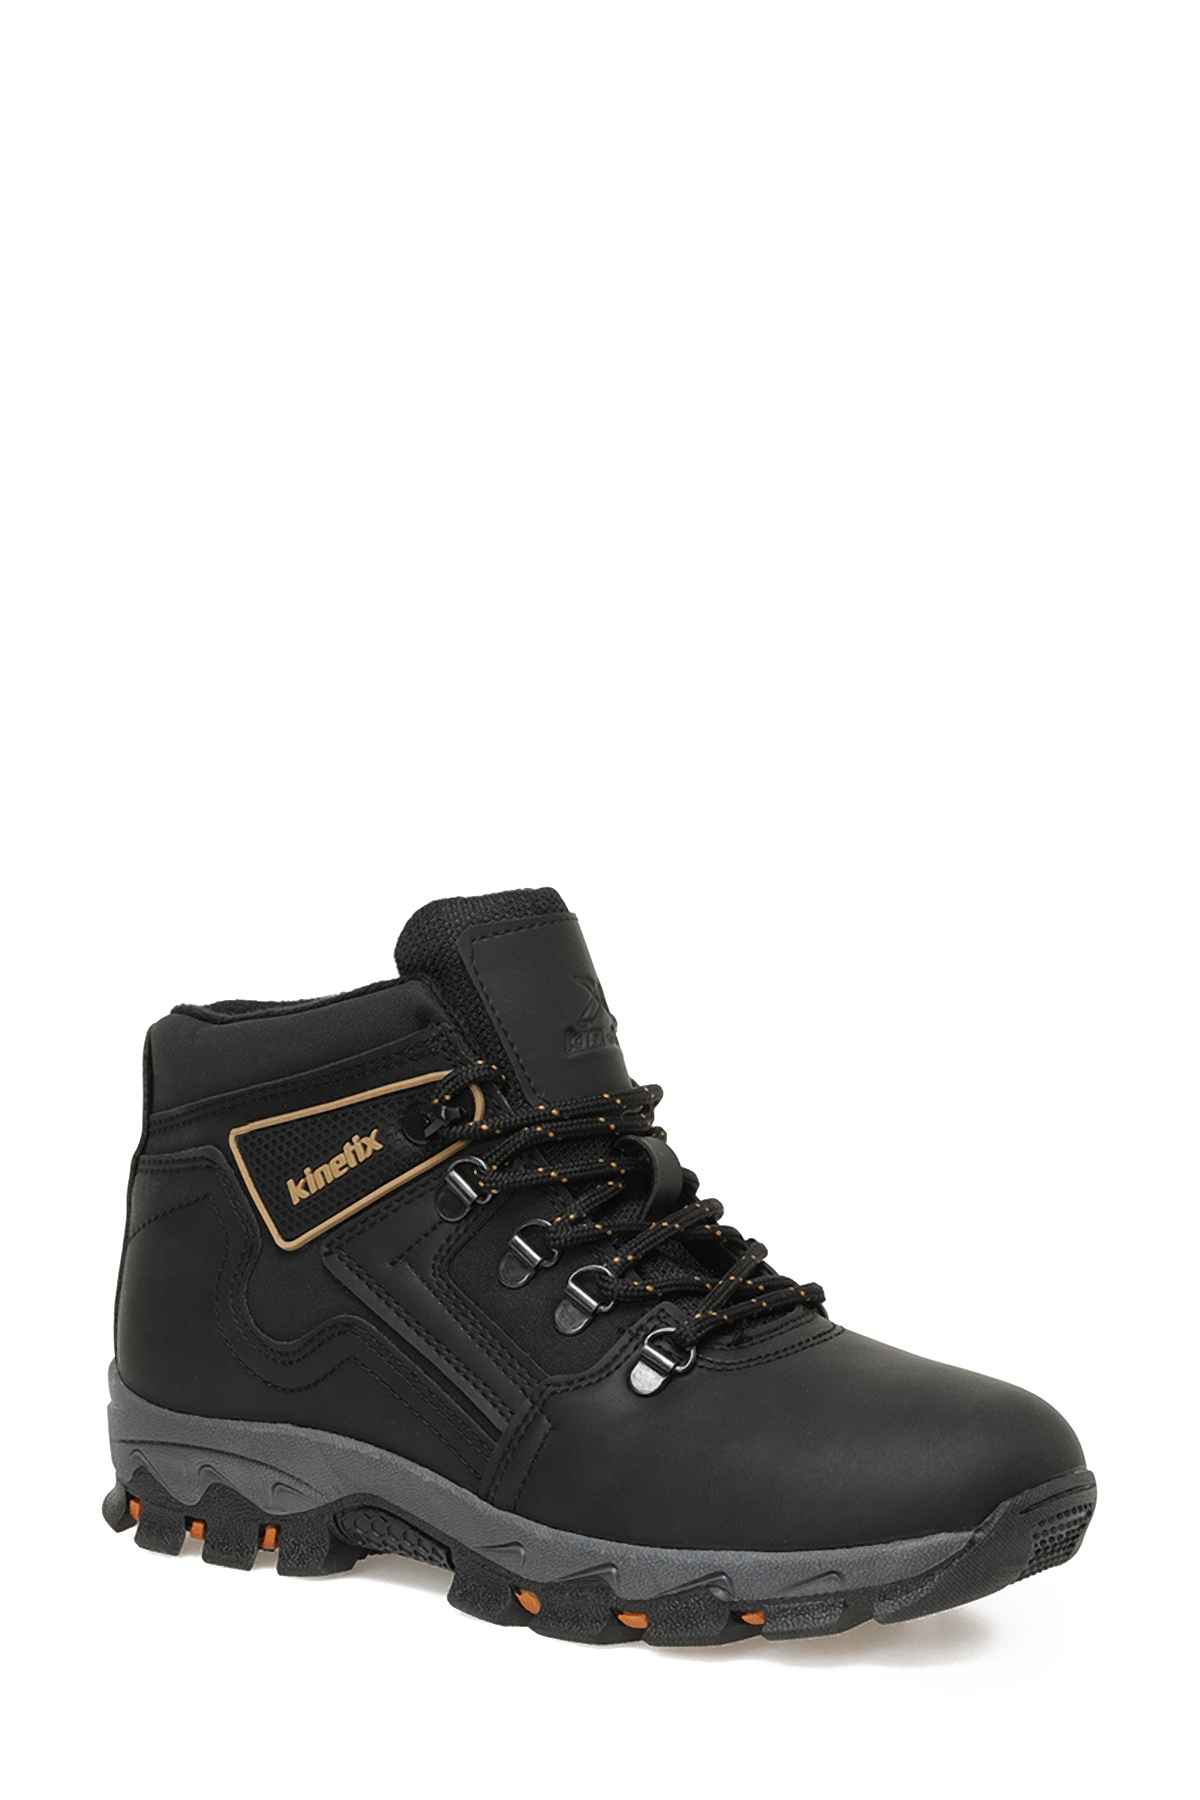 Levně KINETIX MONTAIN G 3PR BLACK Boy Outdoor Boots